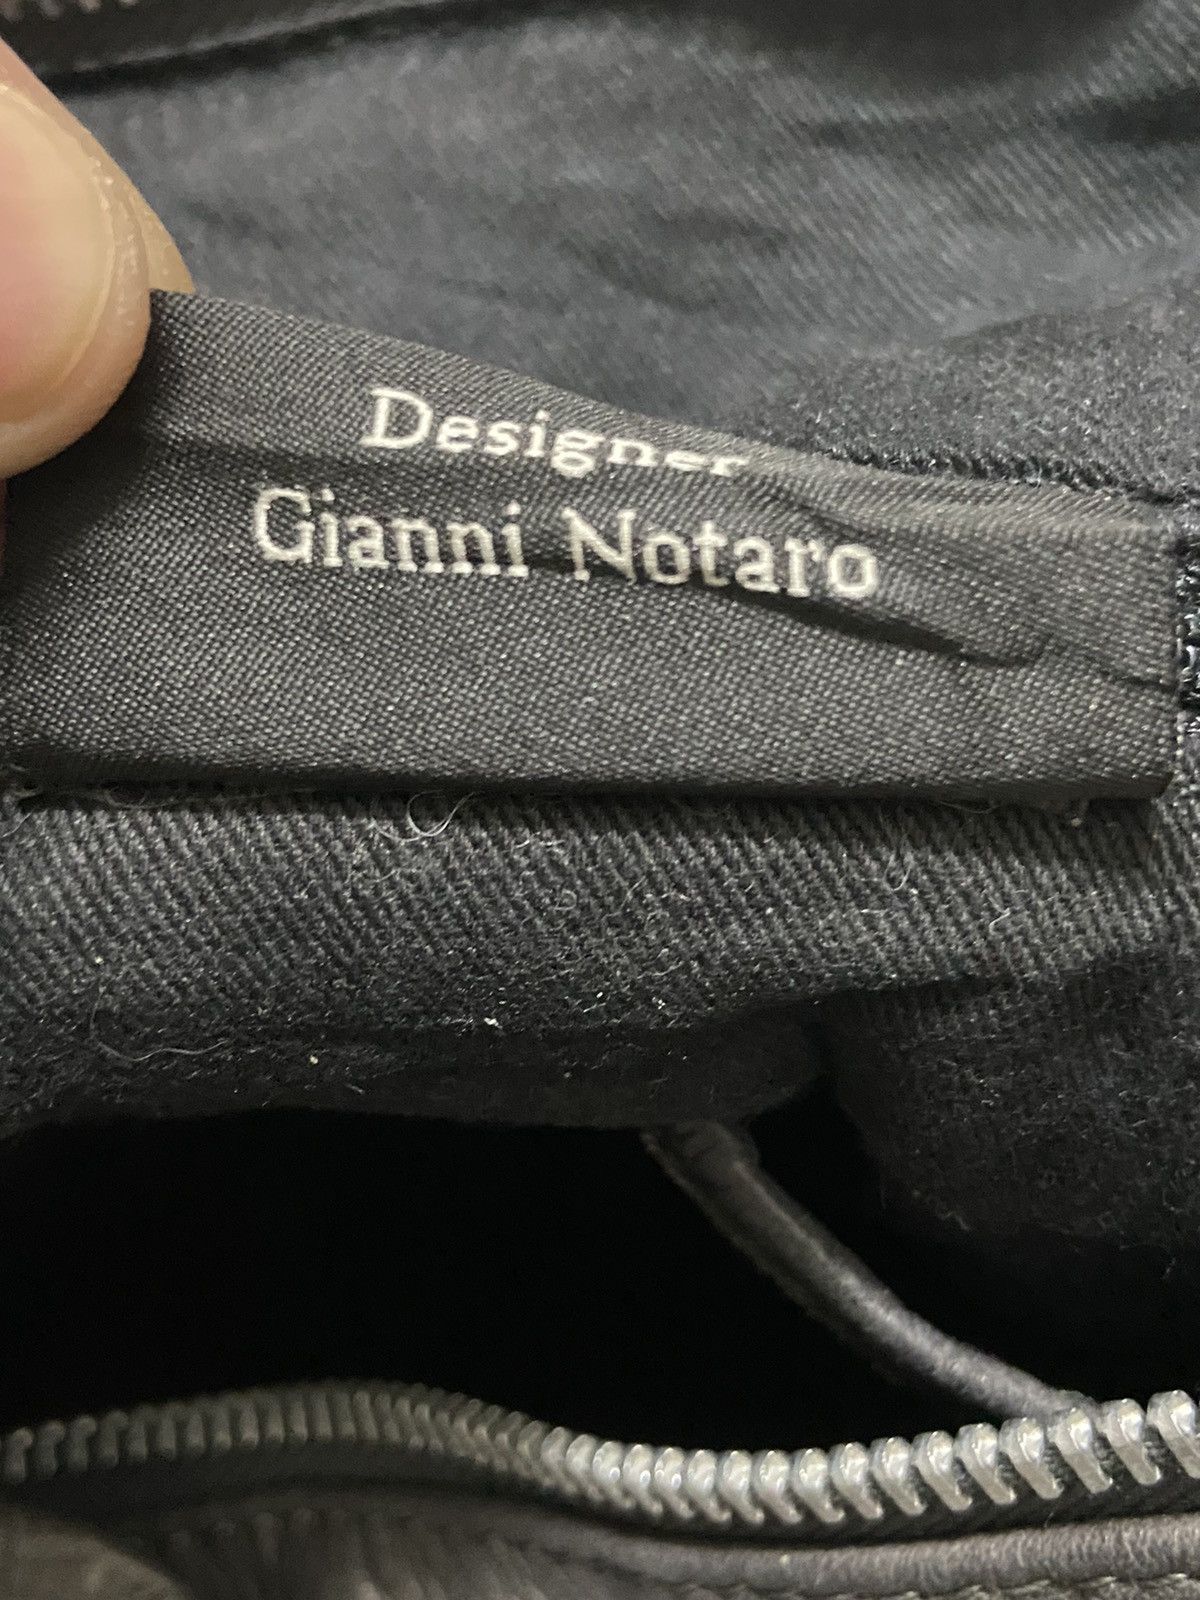 Carol J. designer Gianni Notaro Genuine Leather Bag - 8